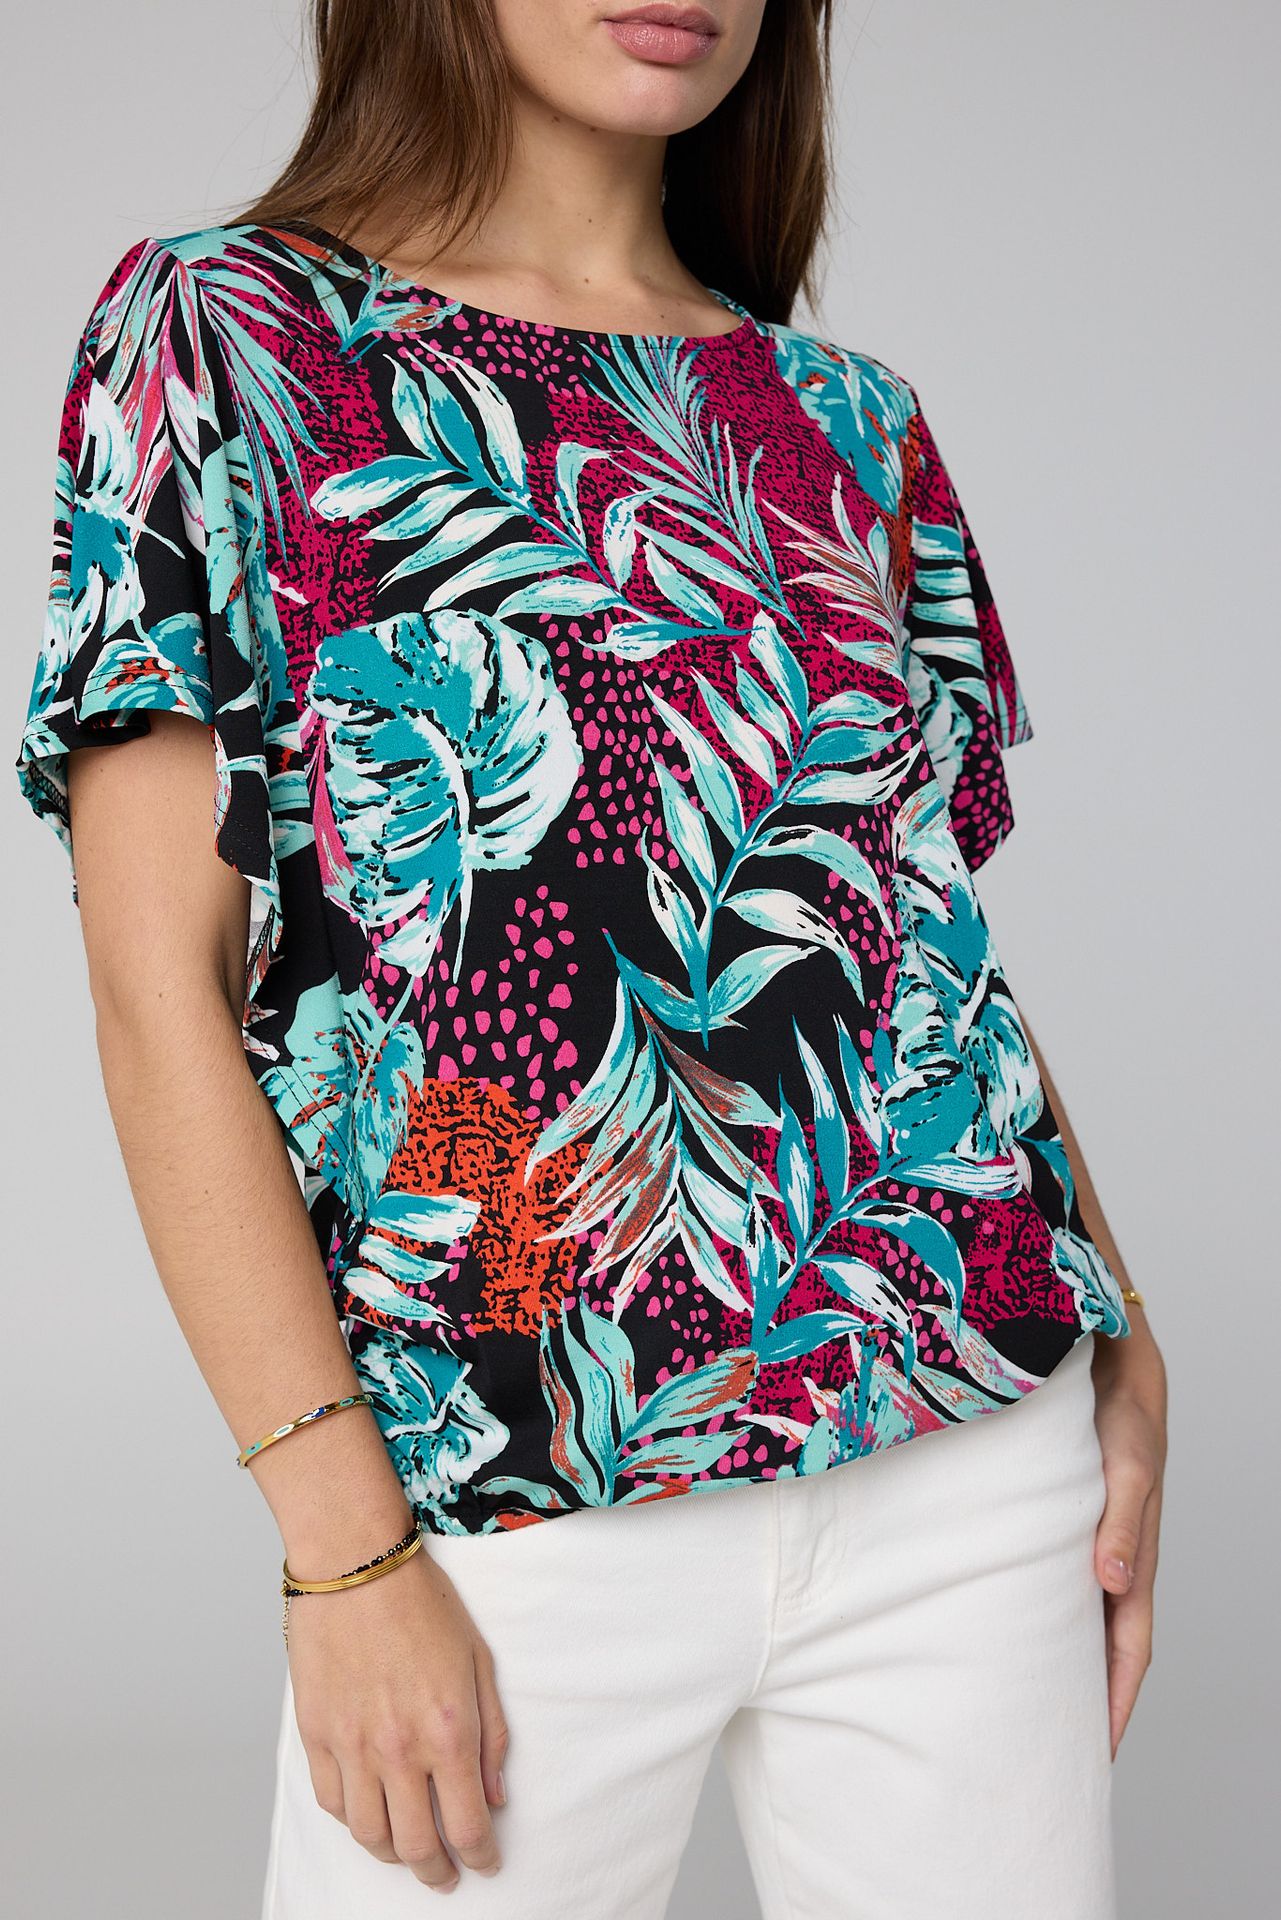 Norah Shirt meerkleurig fuchsia multicolor 212978-957